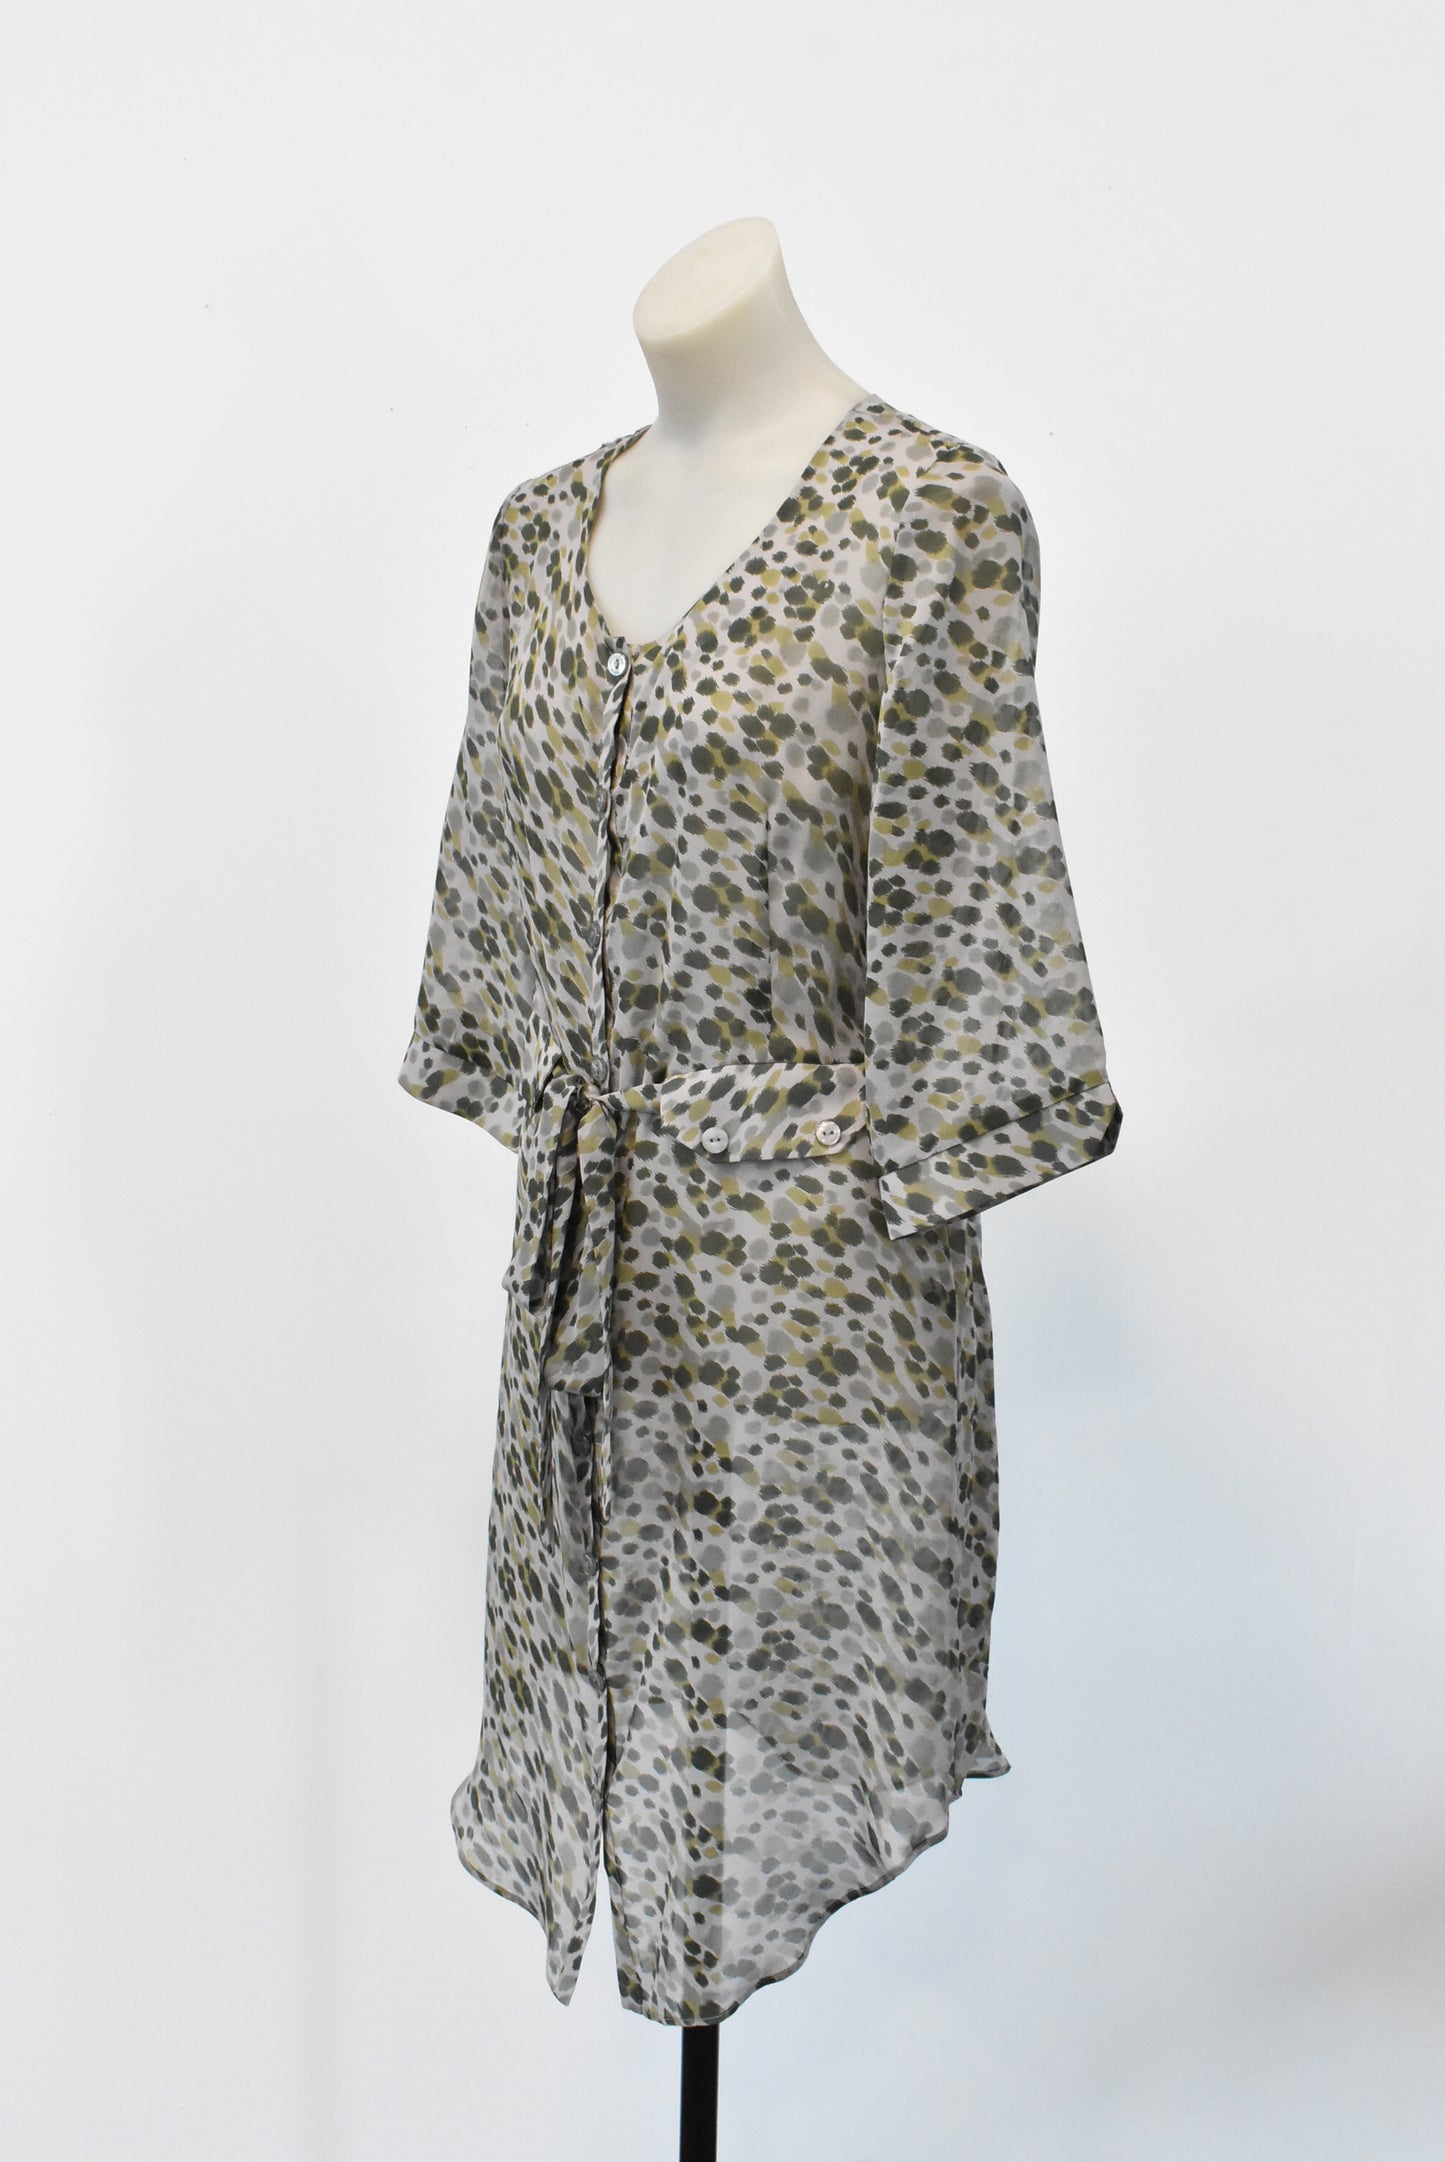 Charmaine Reveley silk button front dress, 10